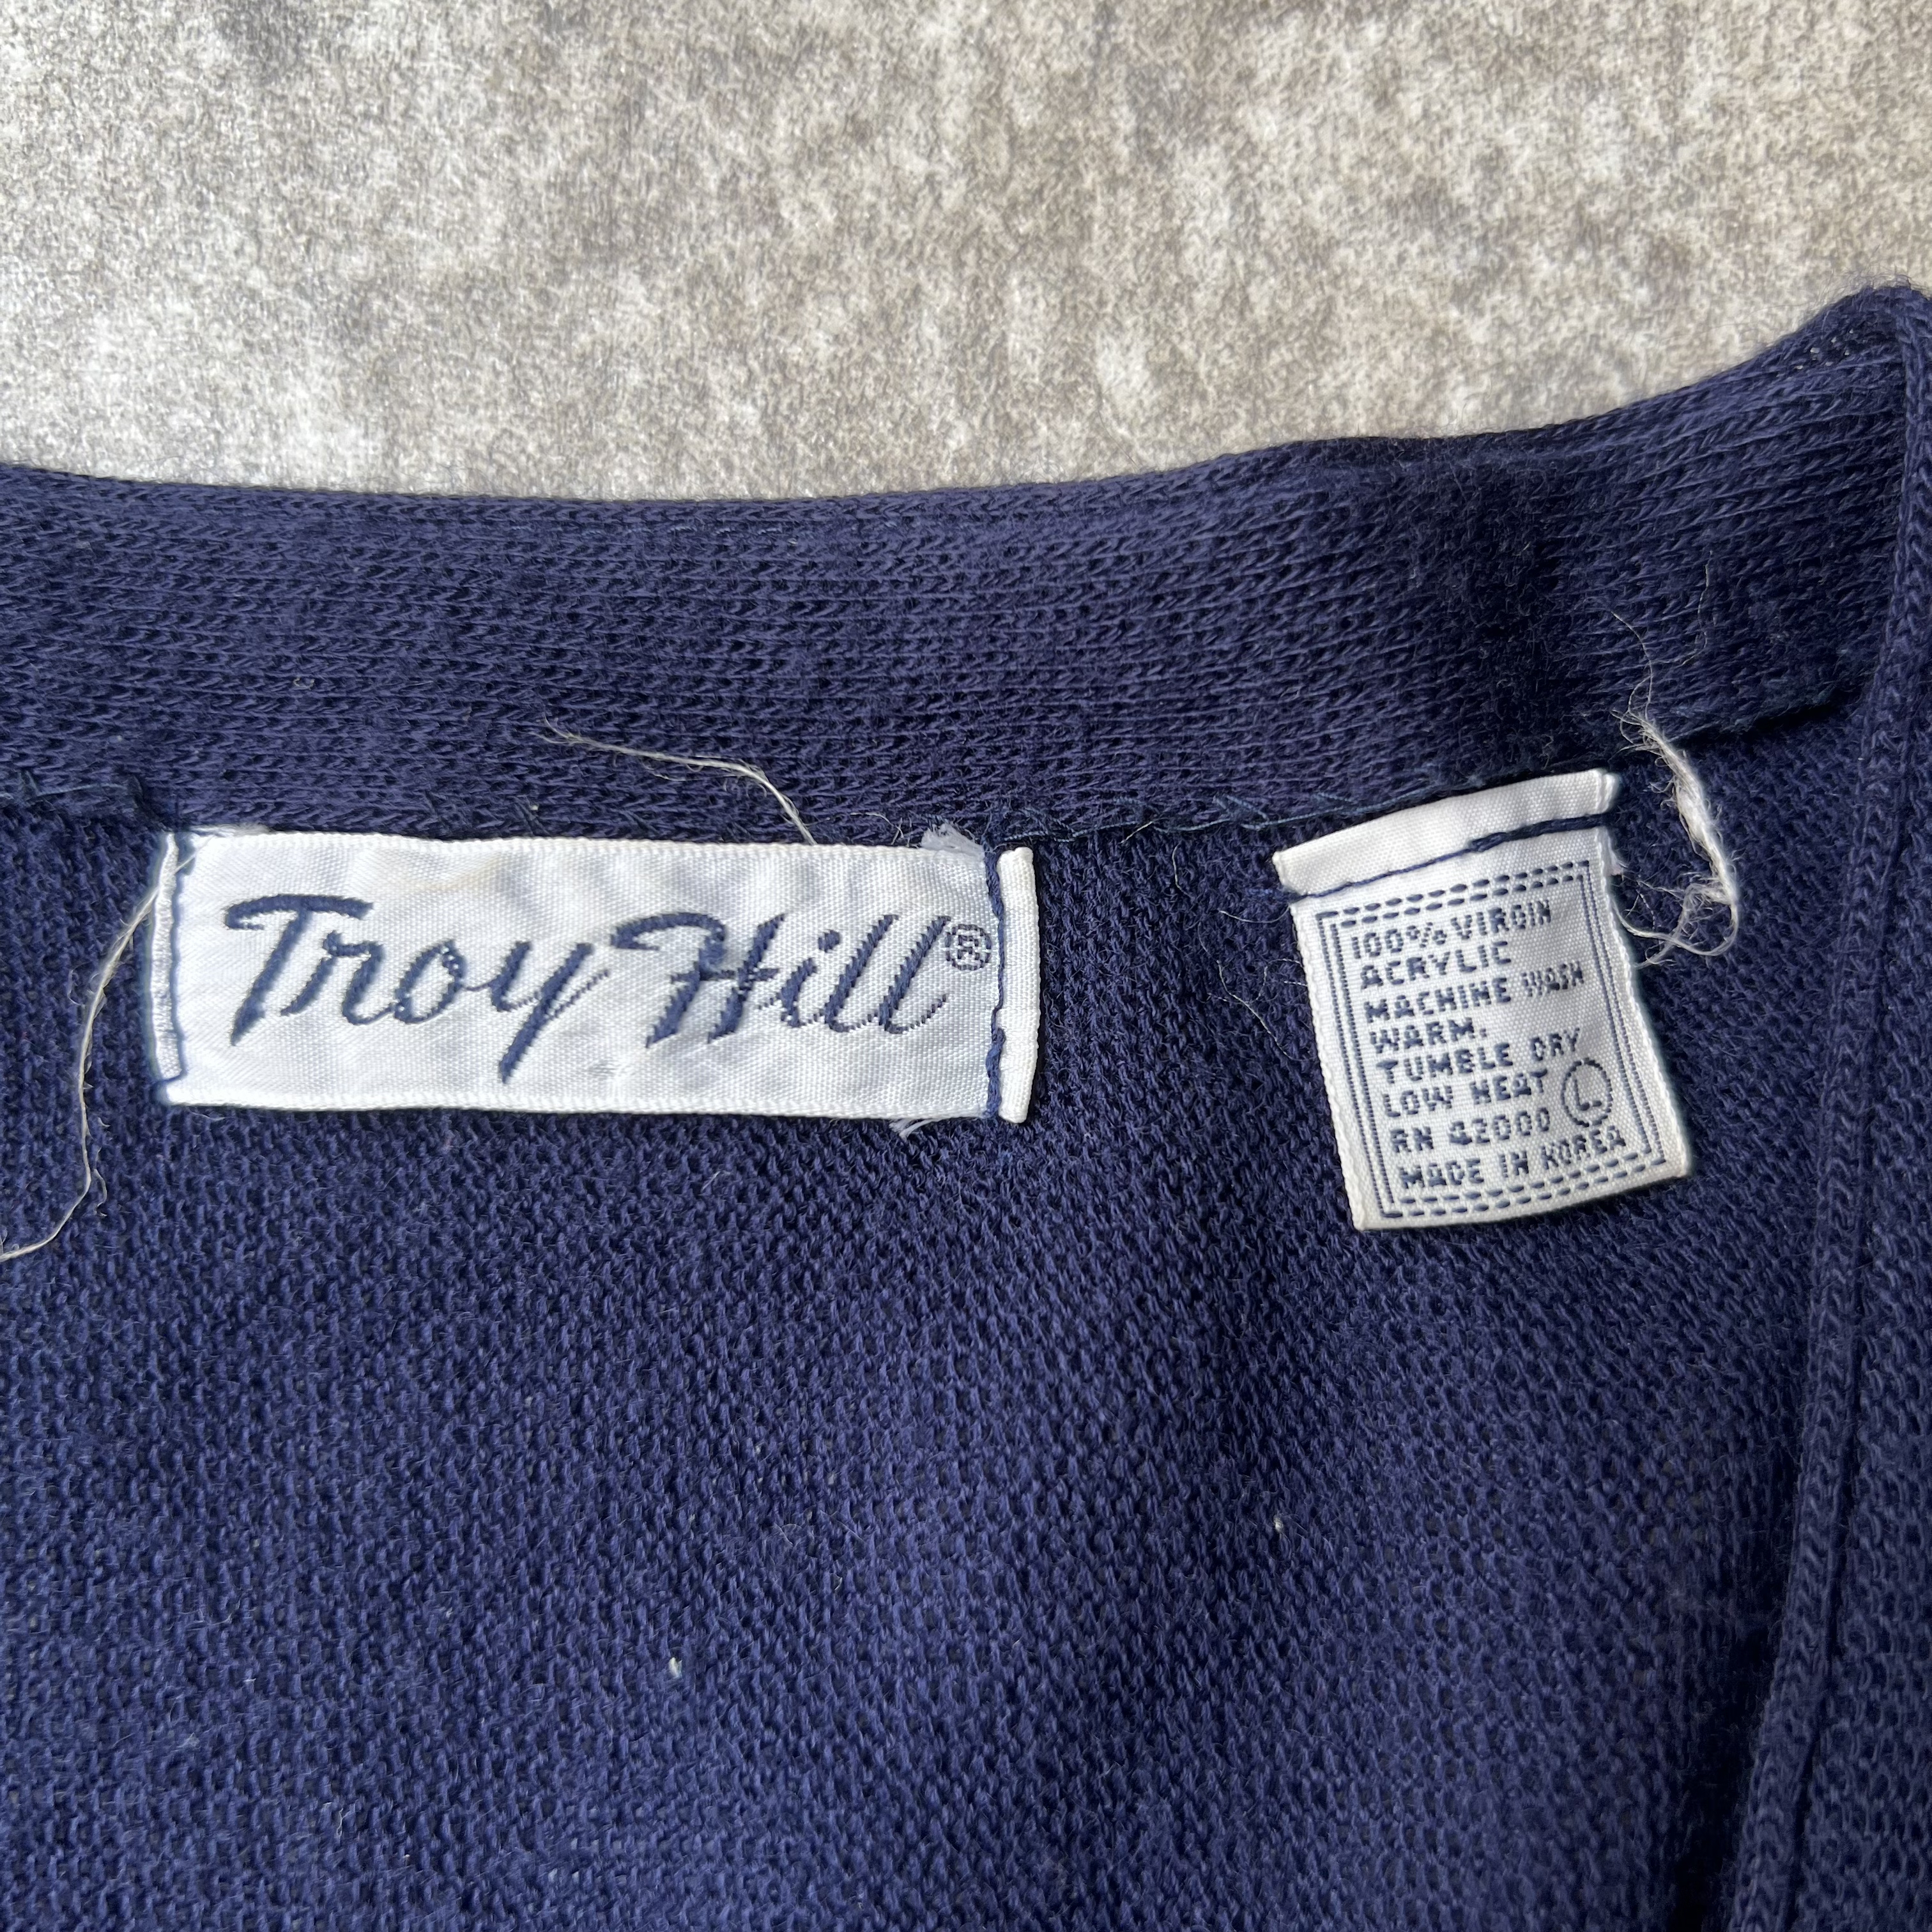 70s VINTAGE Troy Hill acrylic cardigan